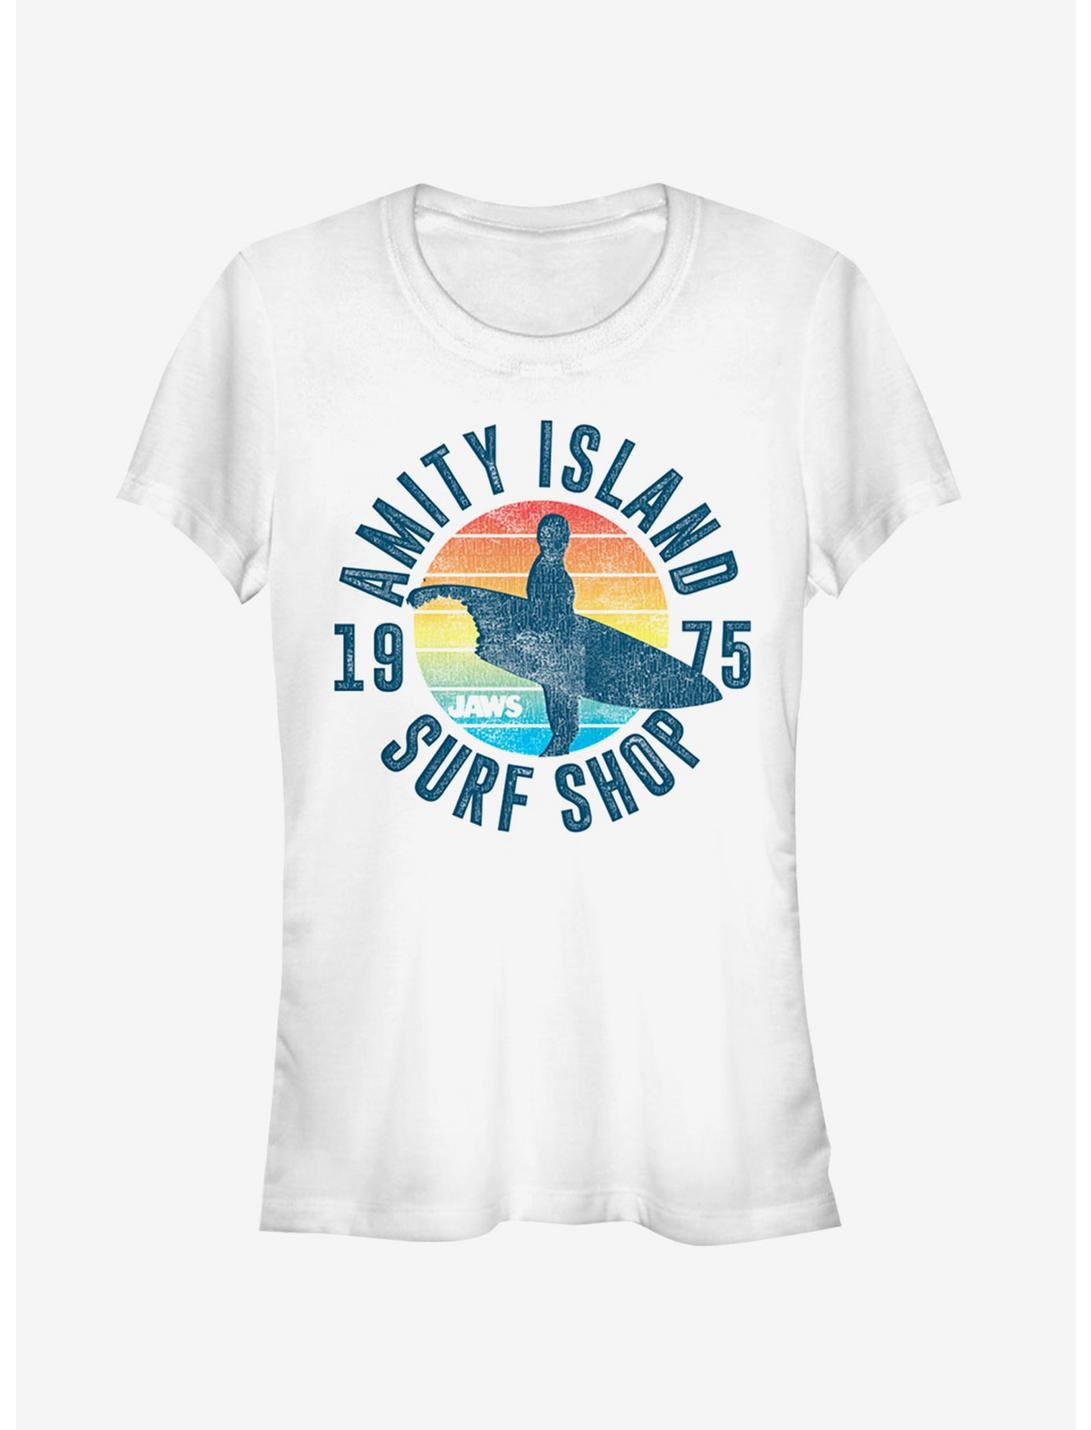 Retro Amity Island Surf Shop Girls T-Shirt, WHITE, hi-res